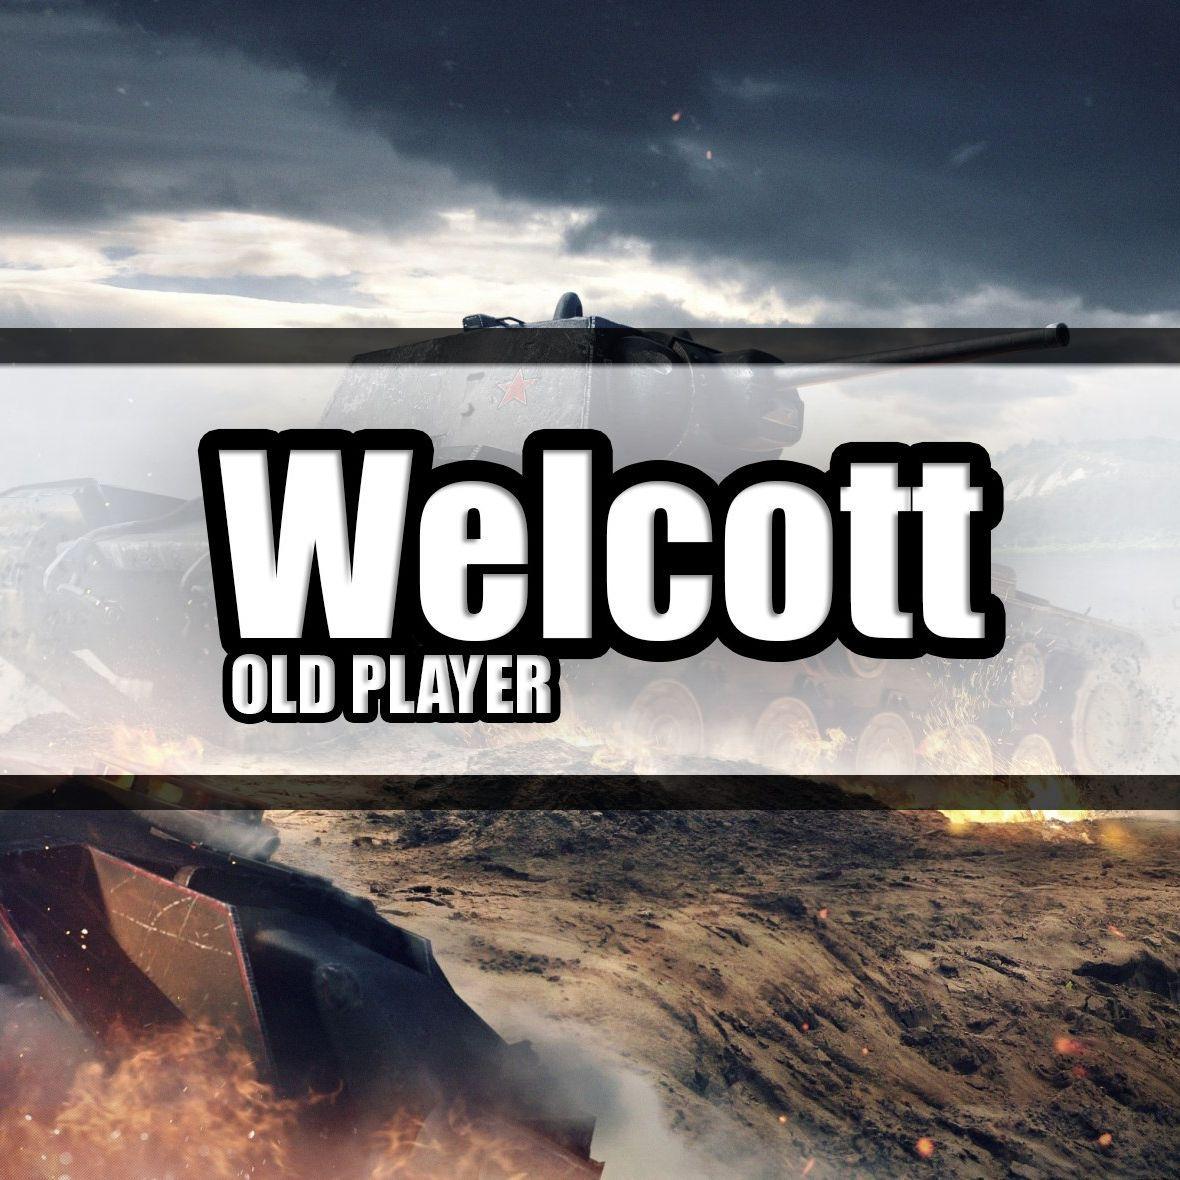 Player Welcott avatar